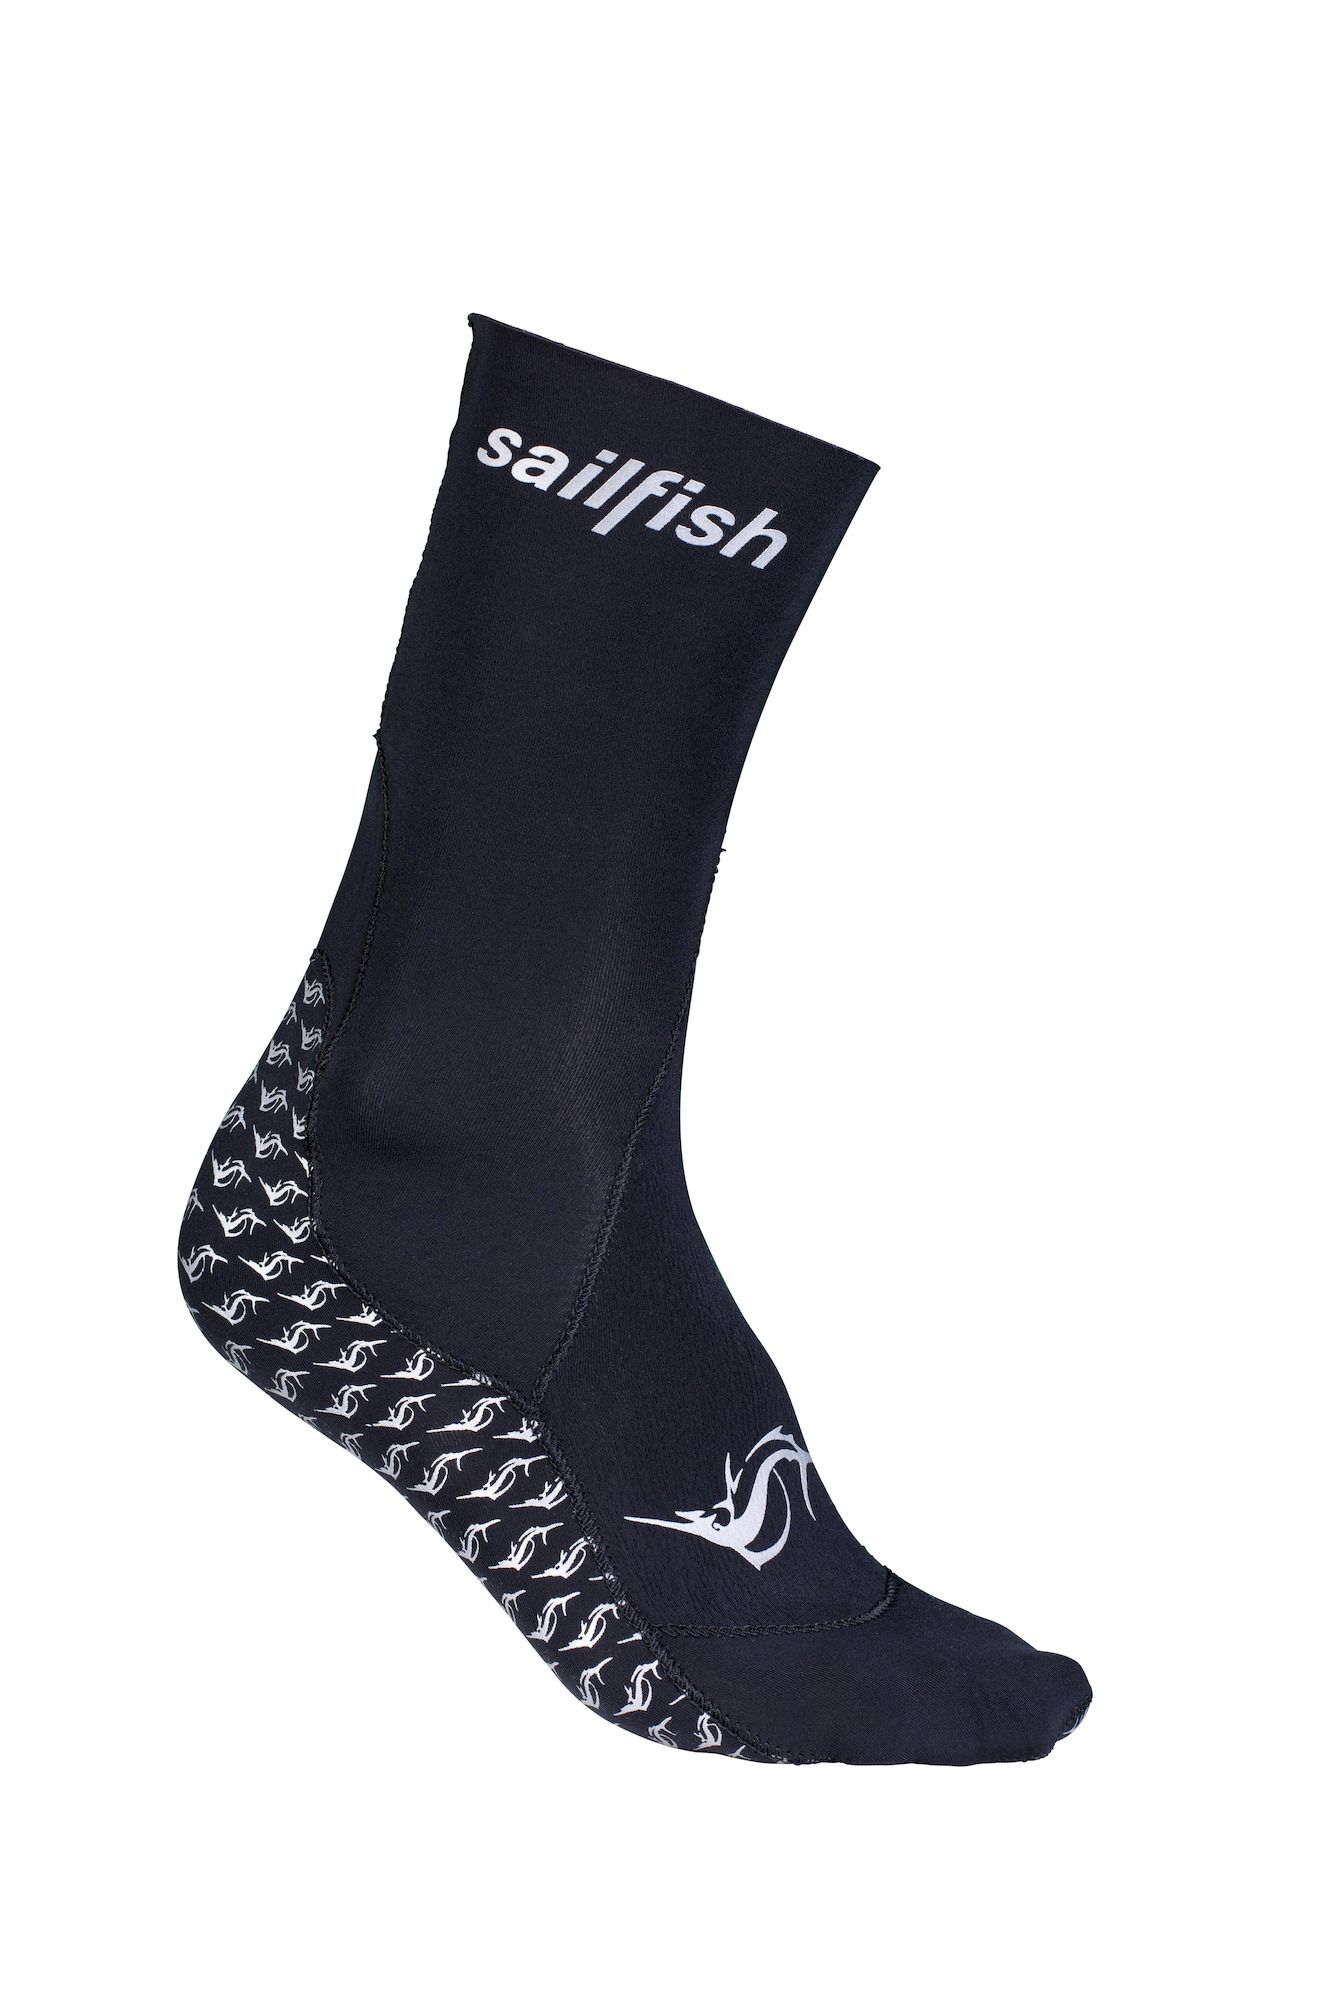 Sailfish Neoprene Socks - Neoprenskor | Hardloop